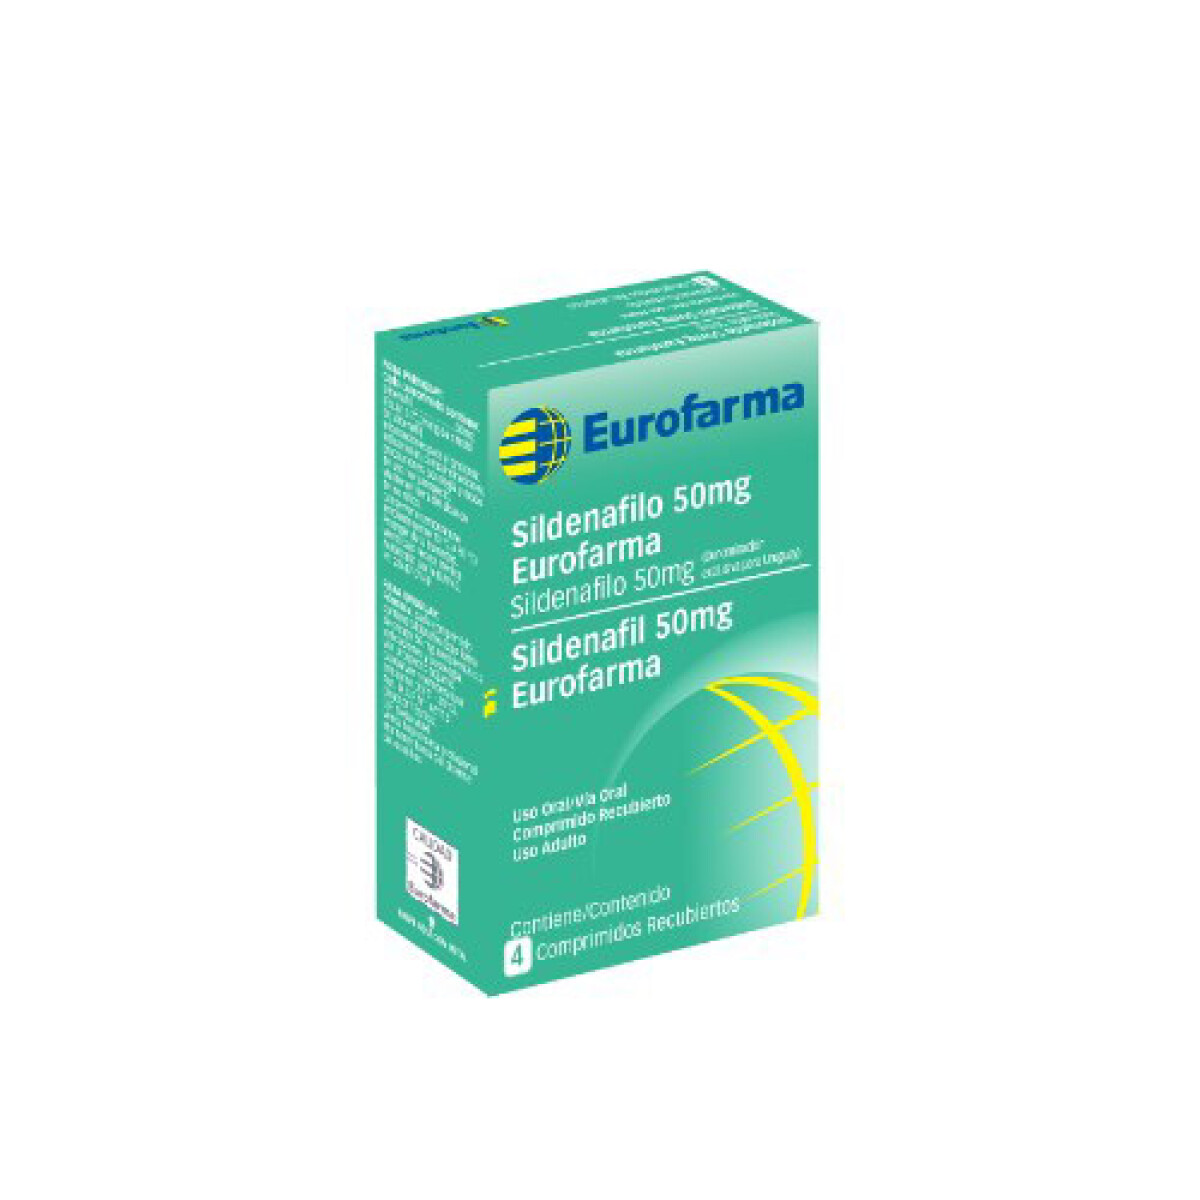 Sildenafil Eurofarma 50mg x 4 COM 